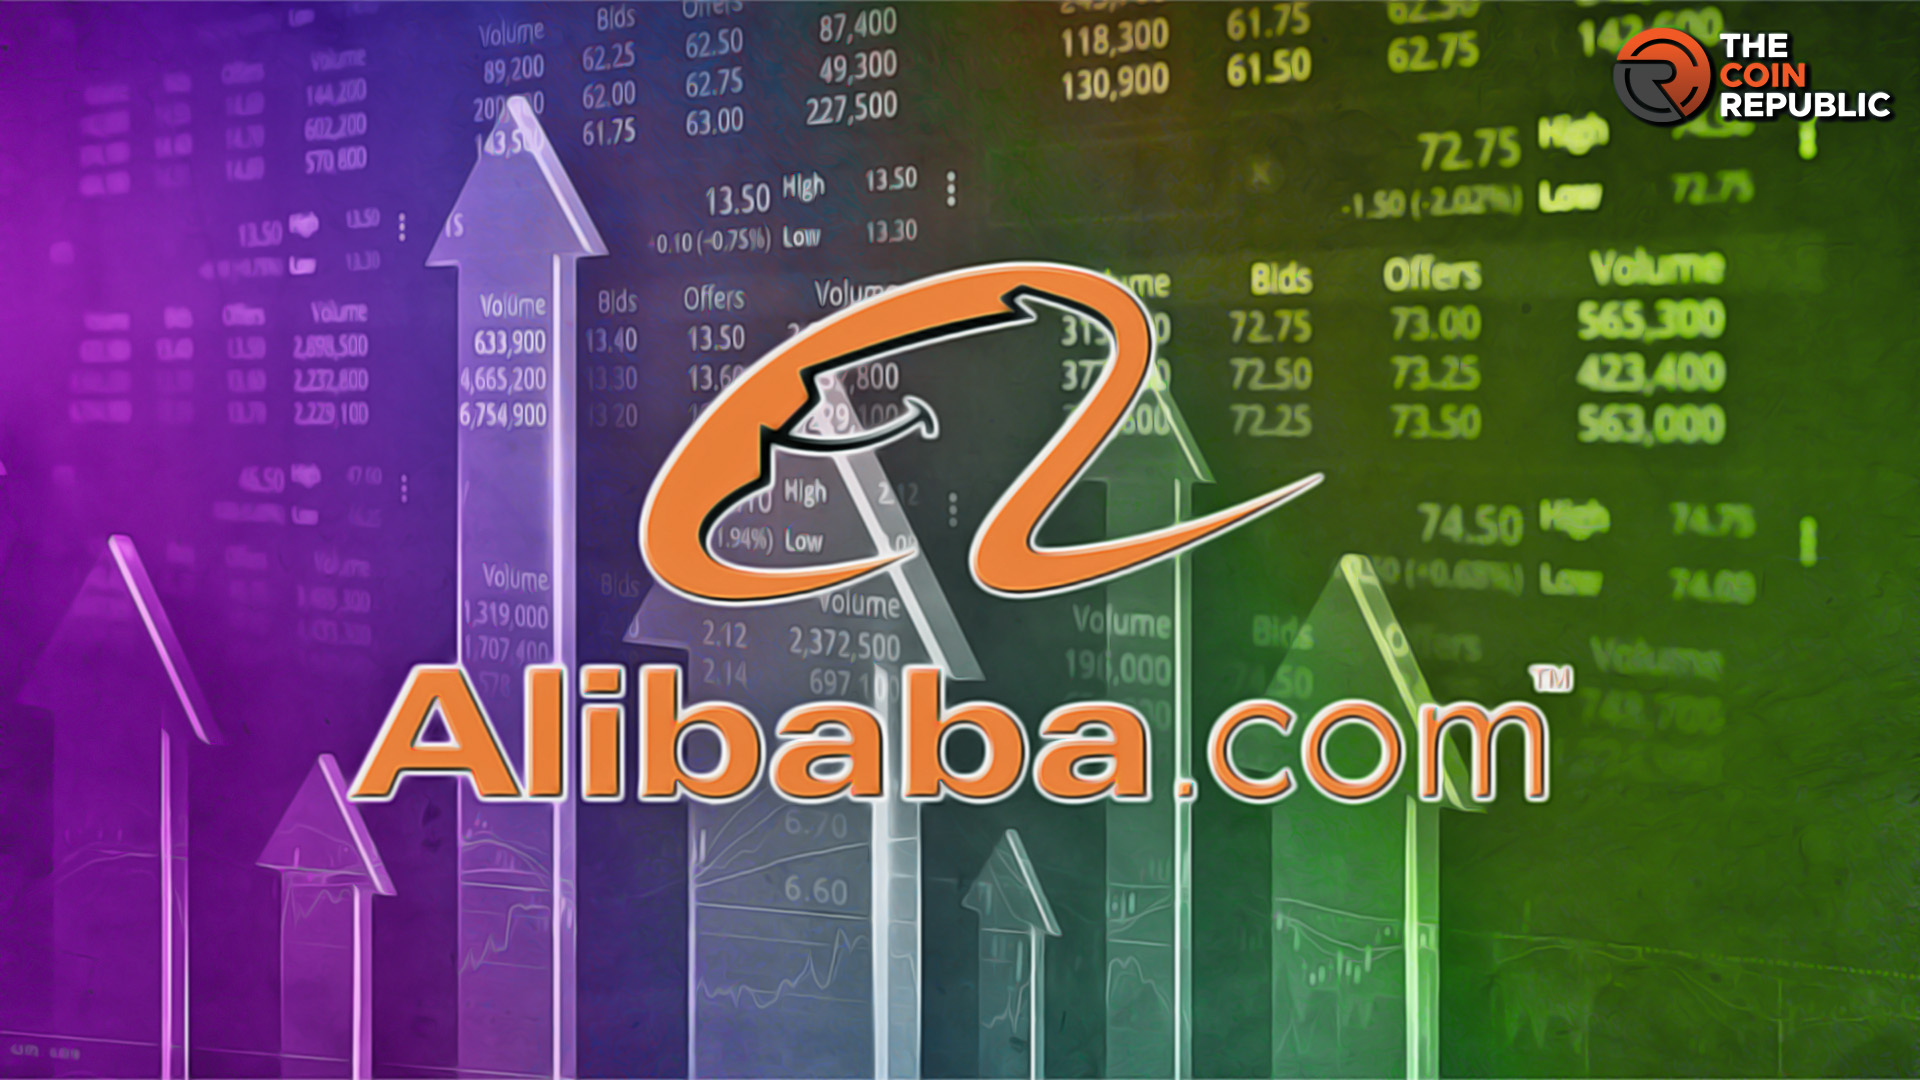 Alibaba Stock Price Prediction: Optimistic Investors Target $100